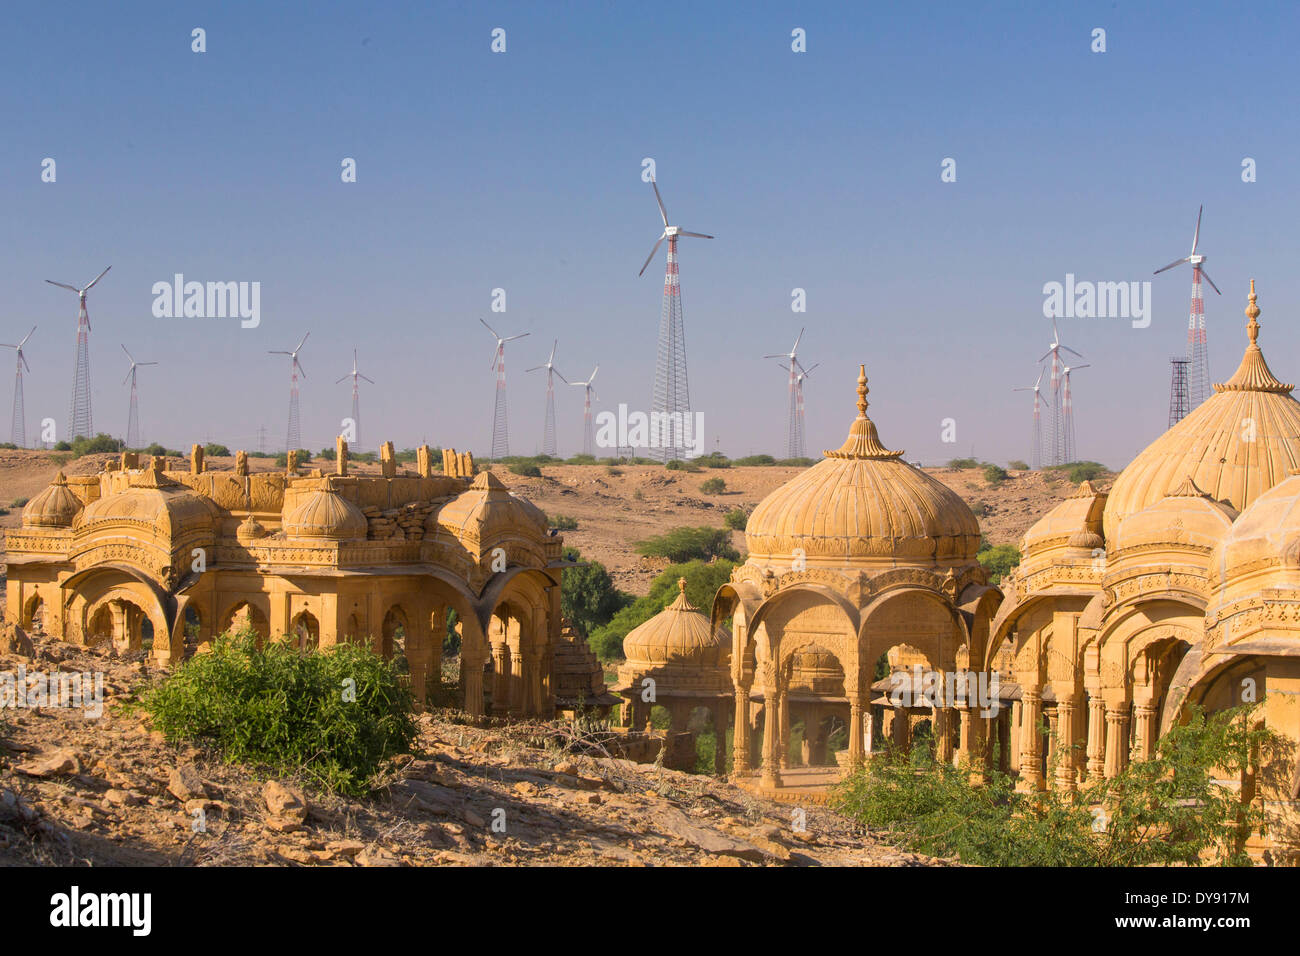 Tumba, Bada Bagh, Jaisalmer, Rajasthan, India, Asia, turbinas eólicas, energía, turbinas eólicas, energía Foto de stock